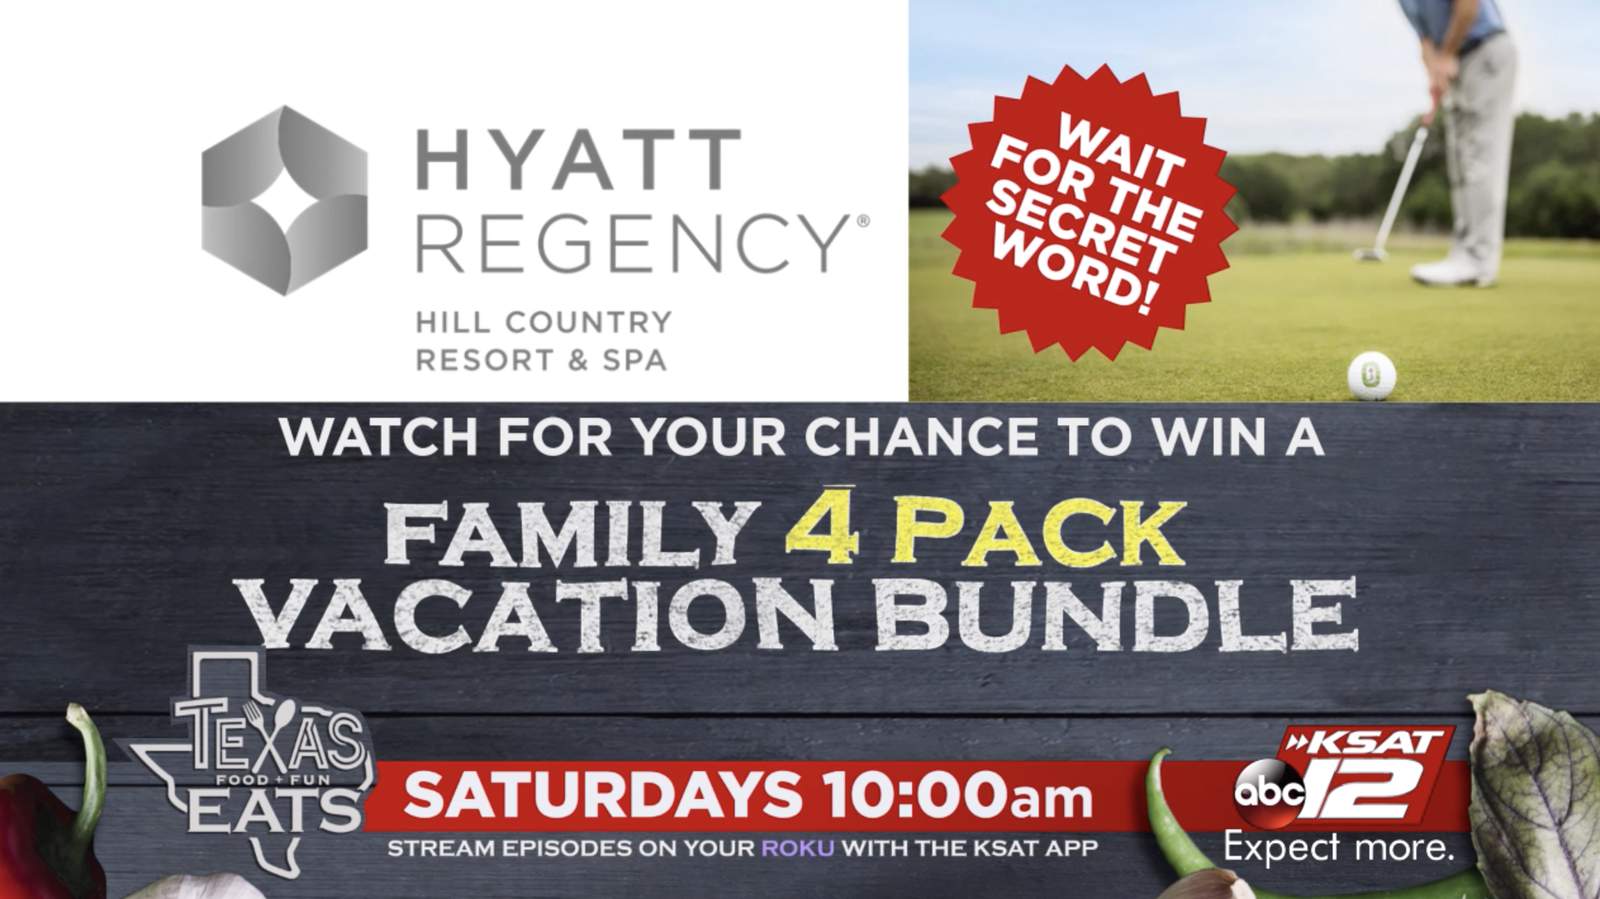 Texas Eats Hyatt Regency Hill Country Resort and Spa contest